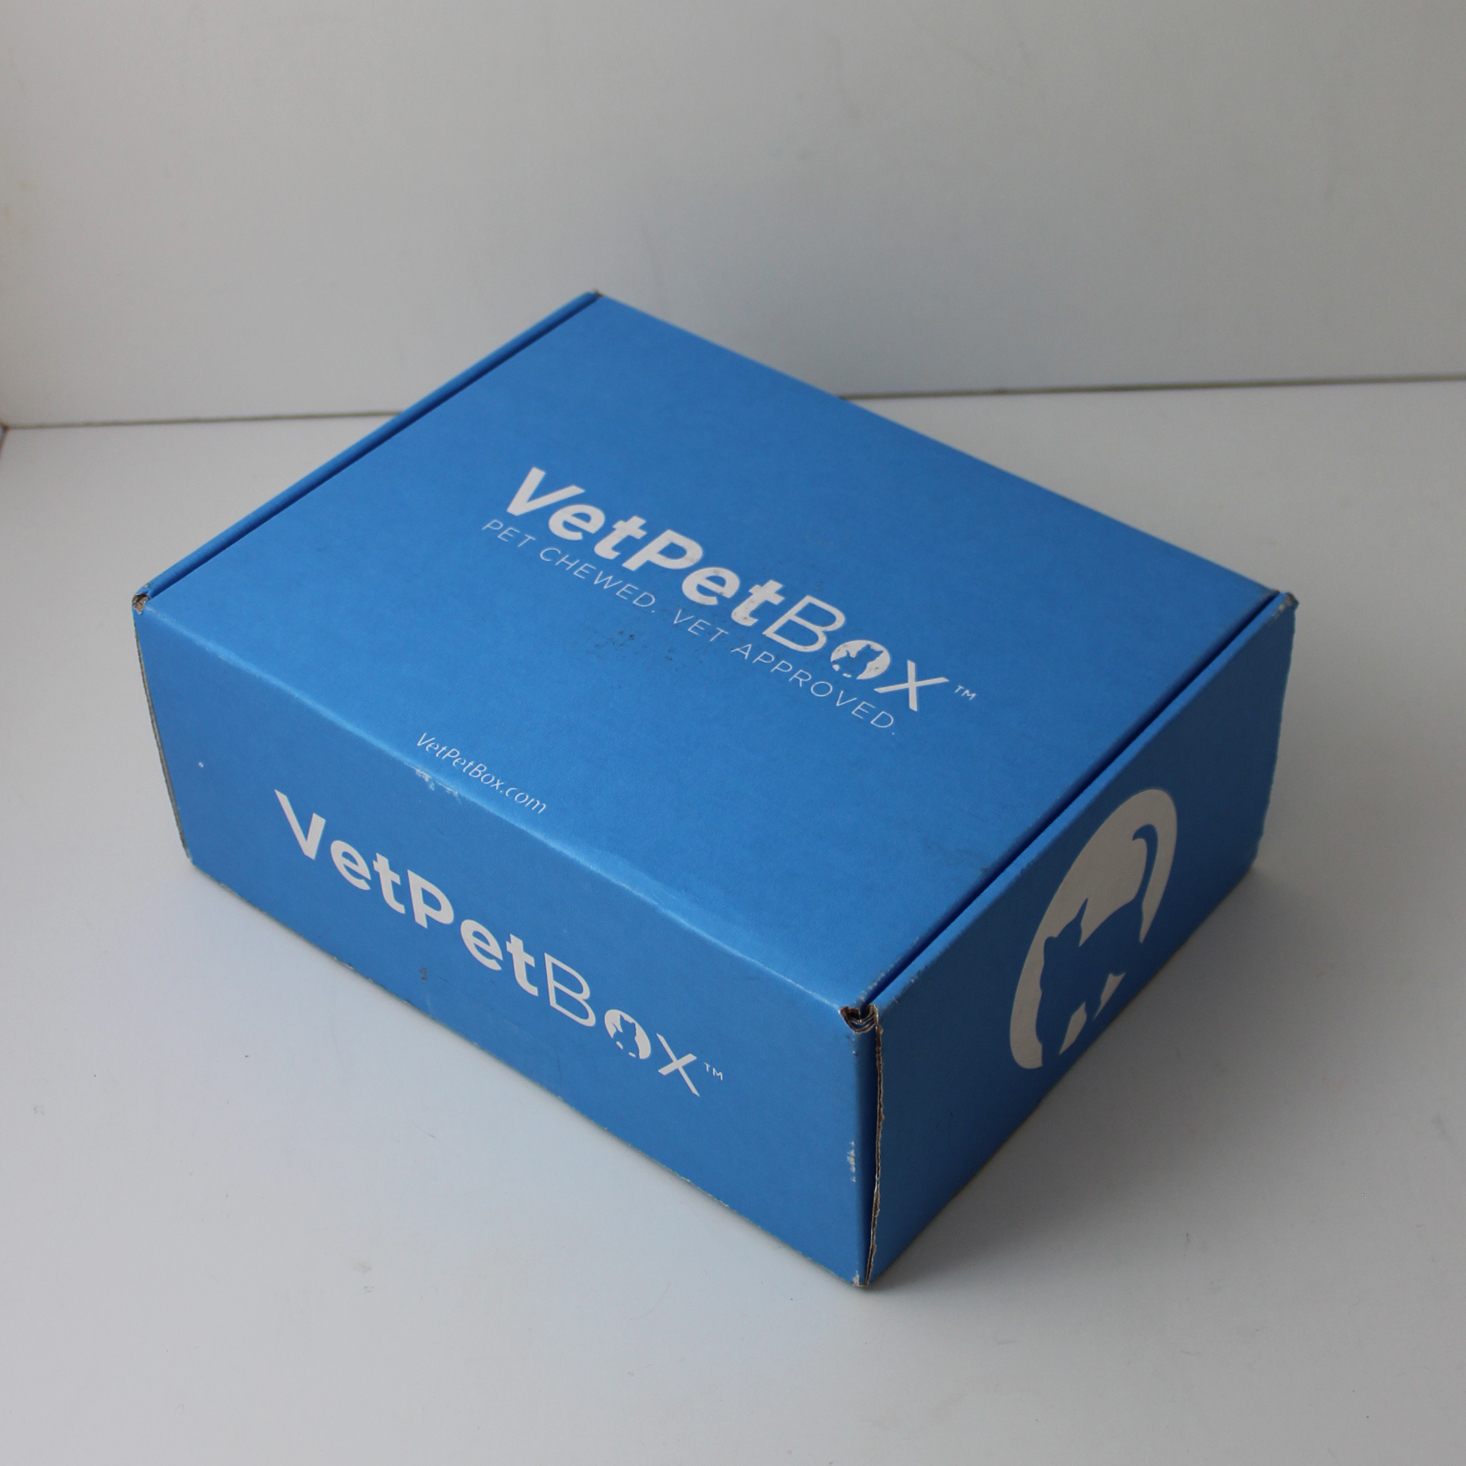 VetPet Box Cat Subscription Review + Coupon – July 2020